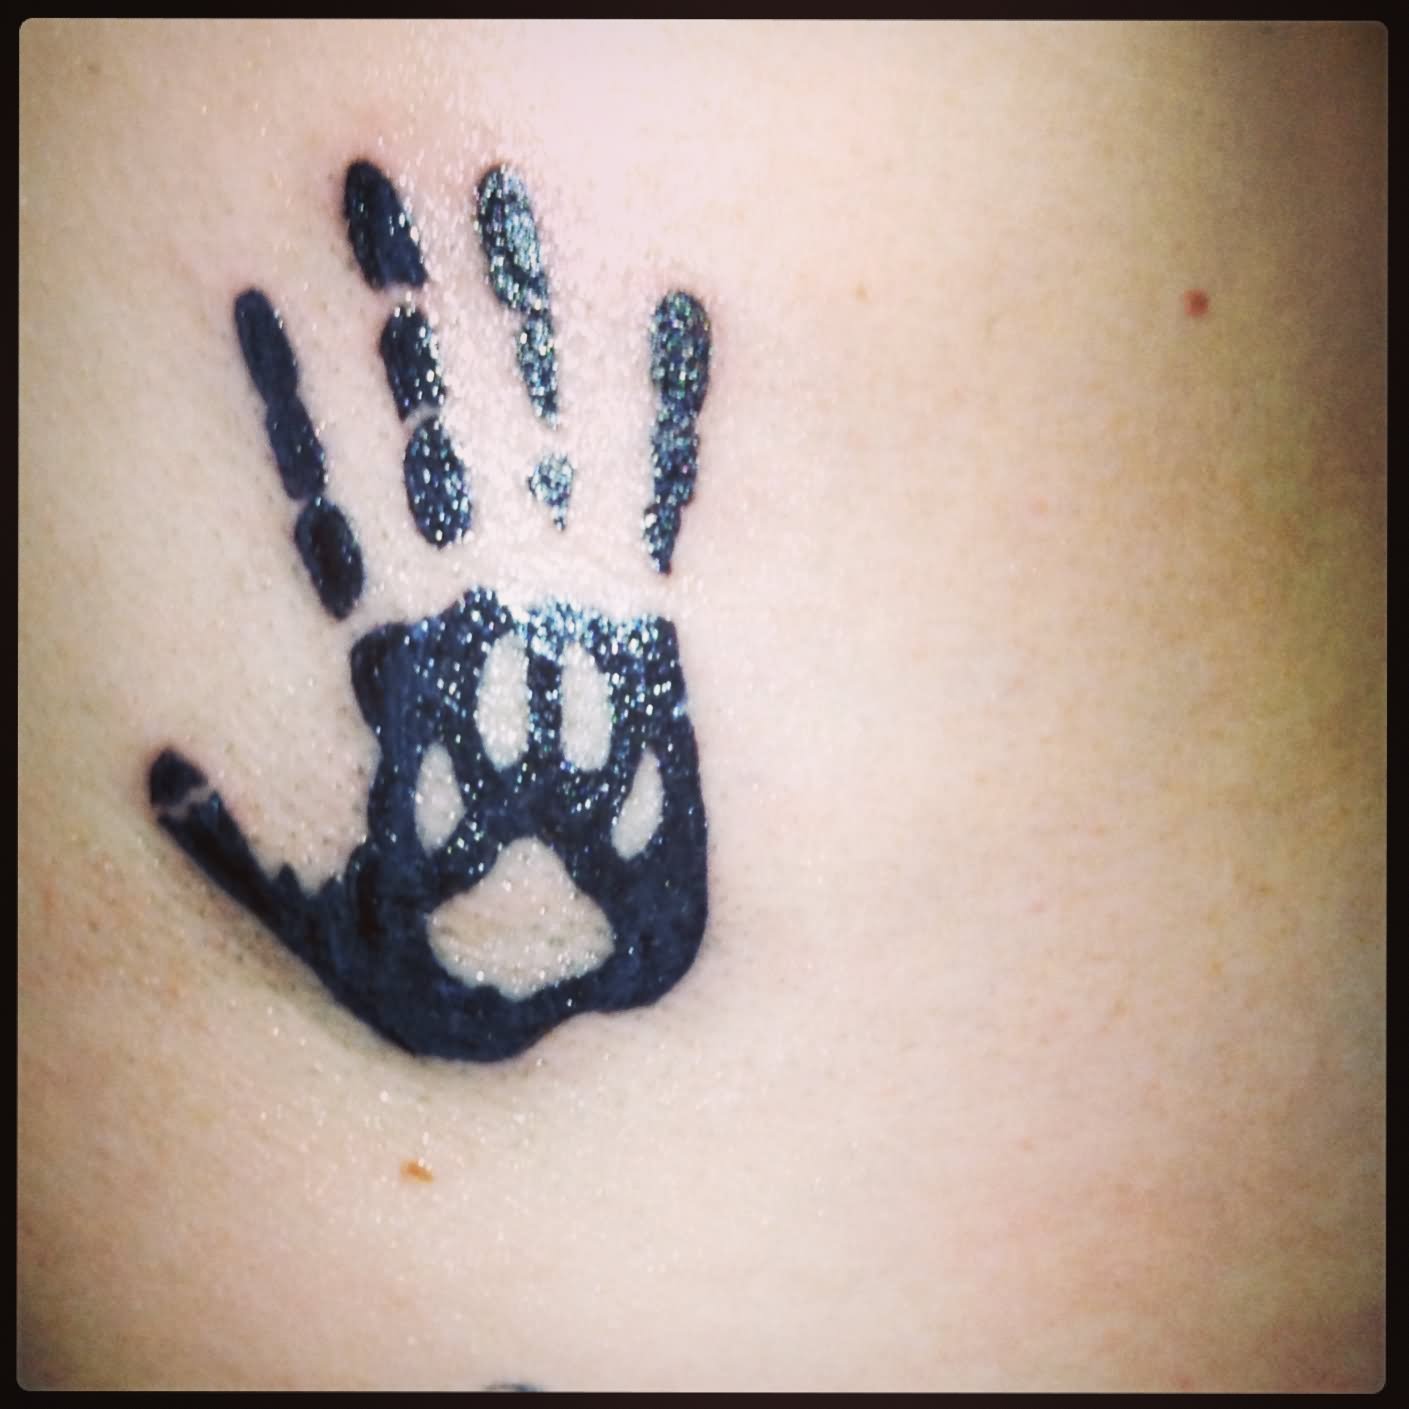 Black Paw In Hand Print Tattoo Design